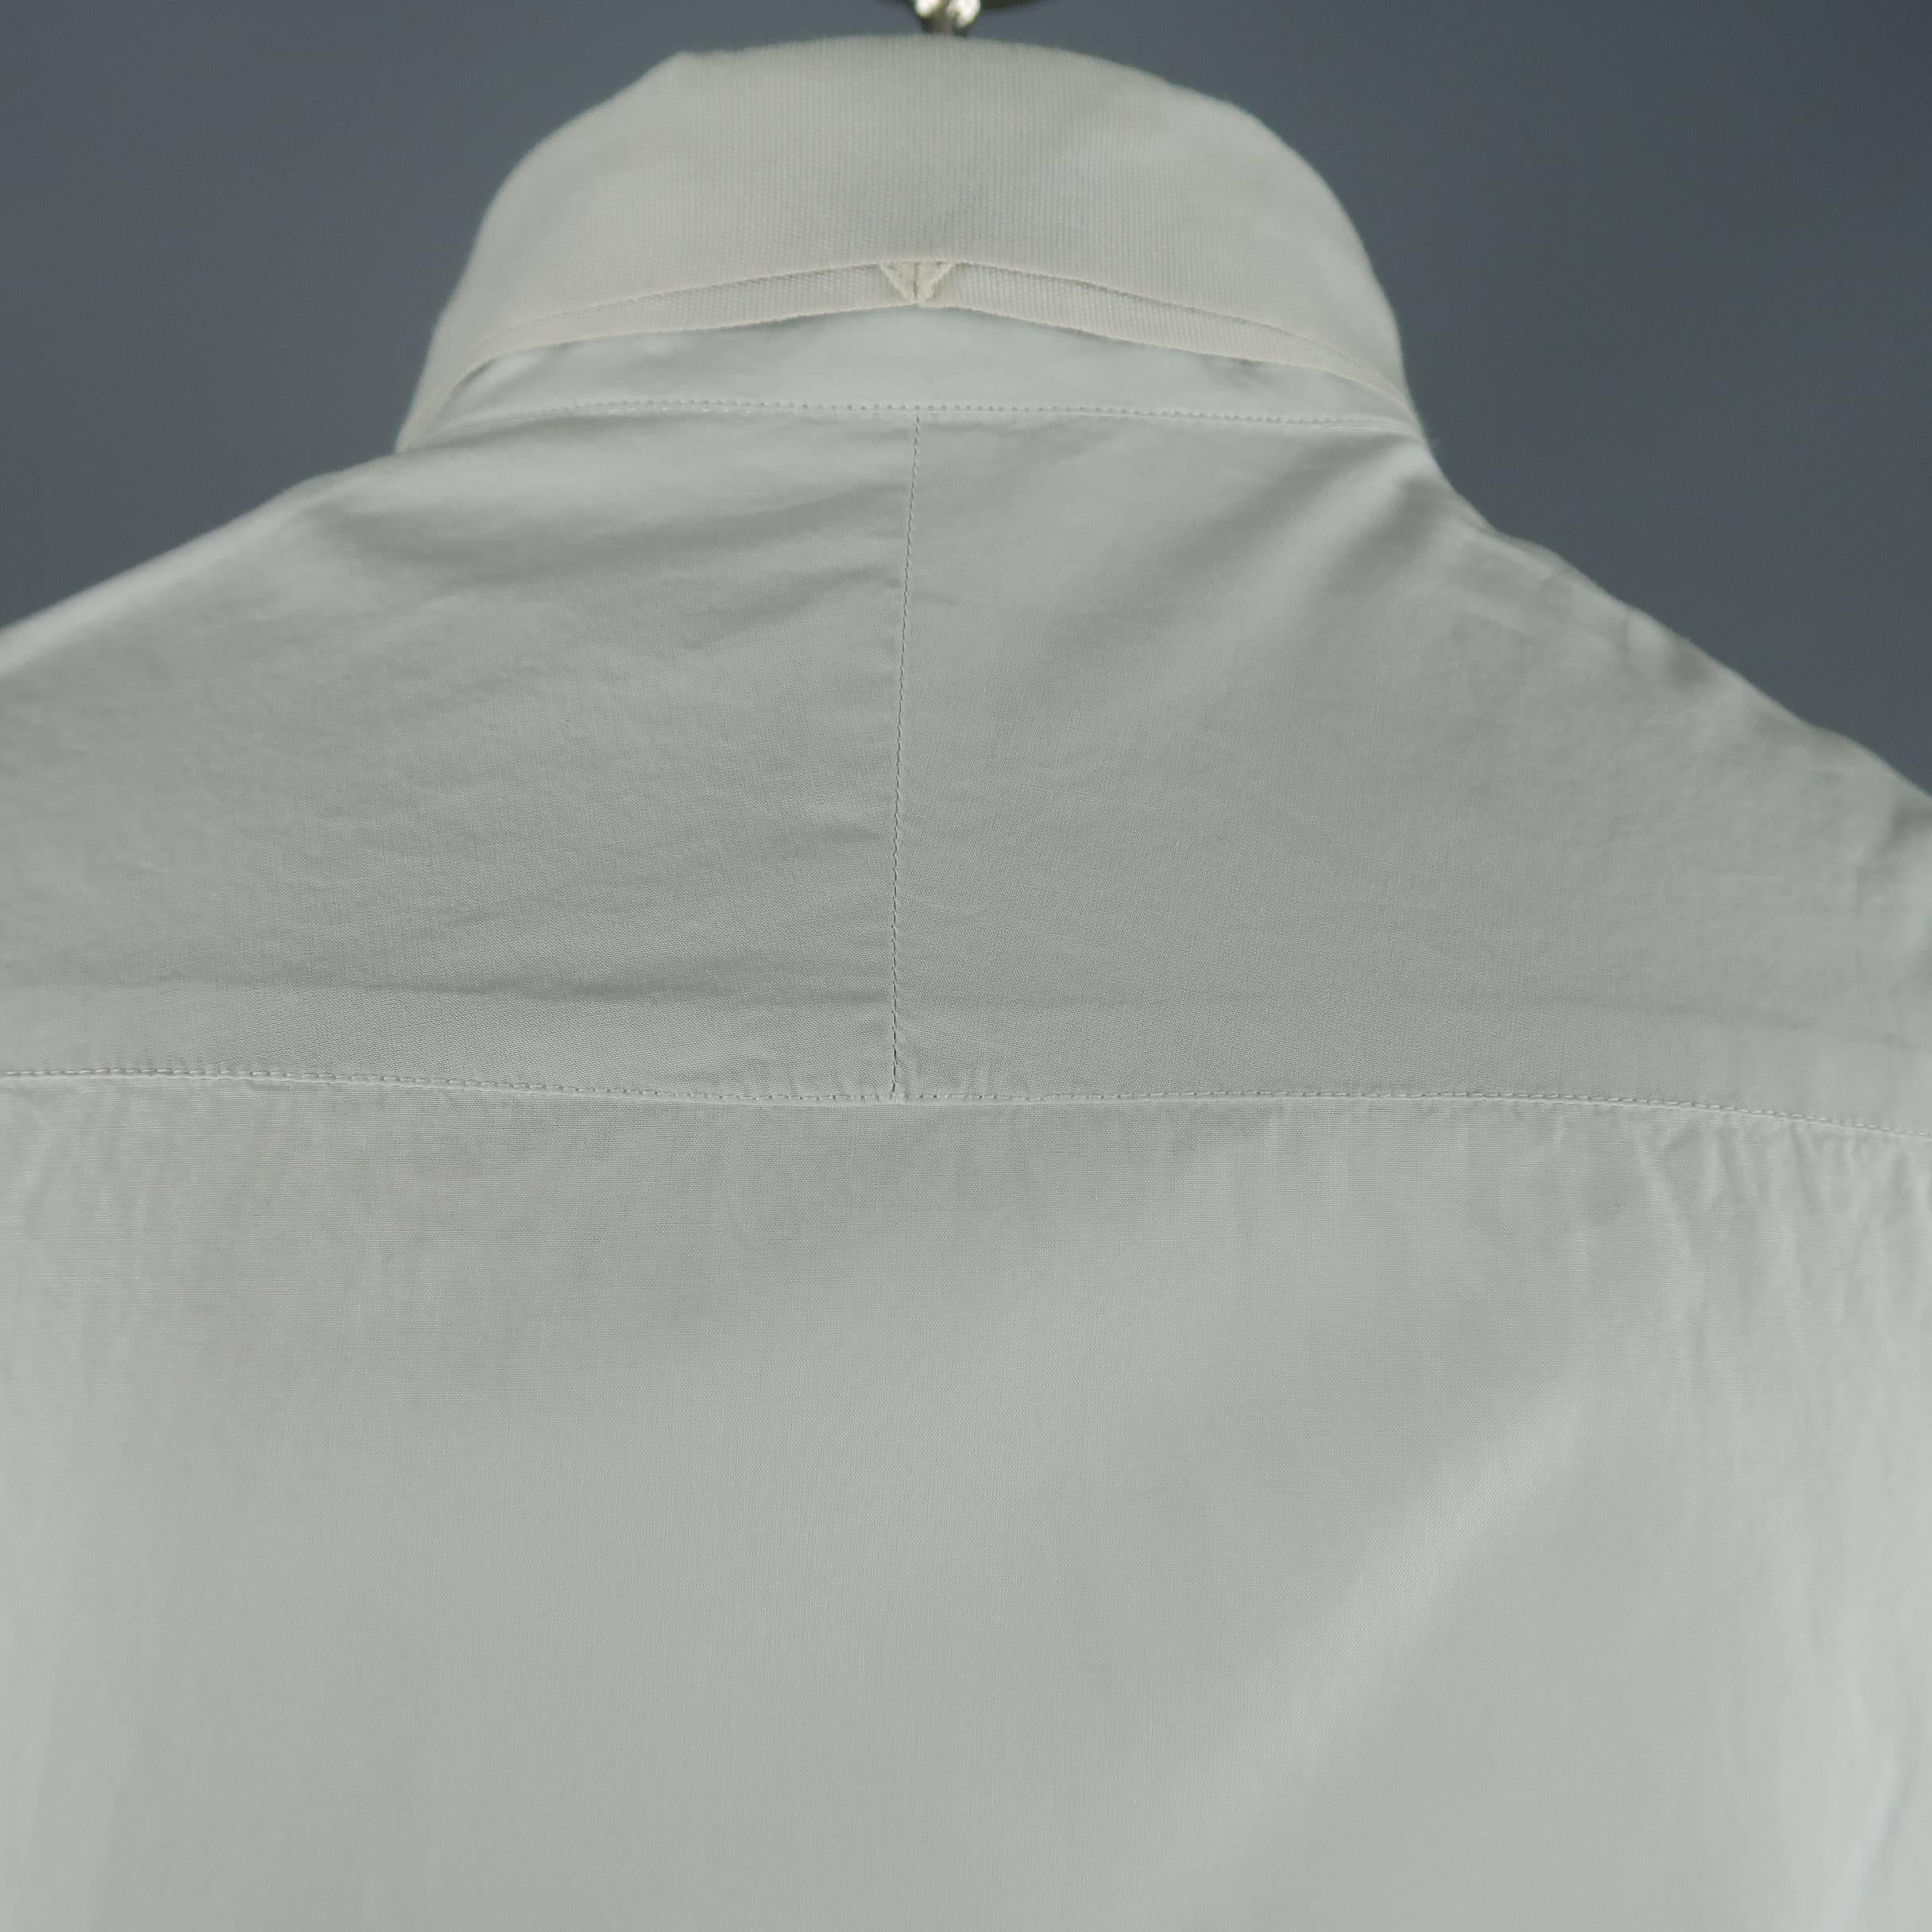 light gray long sleeve shirt